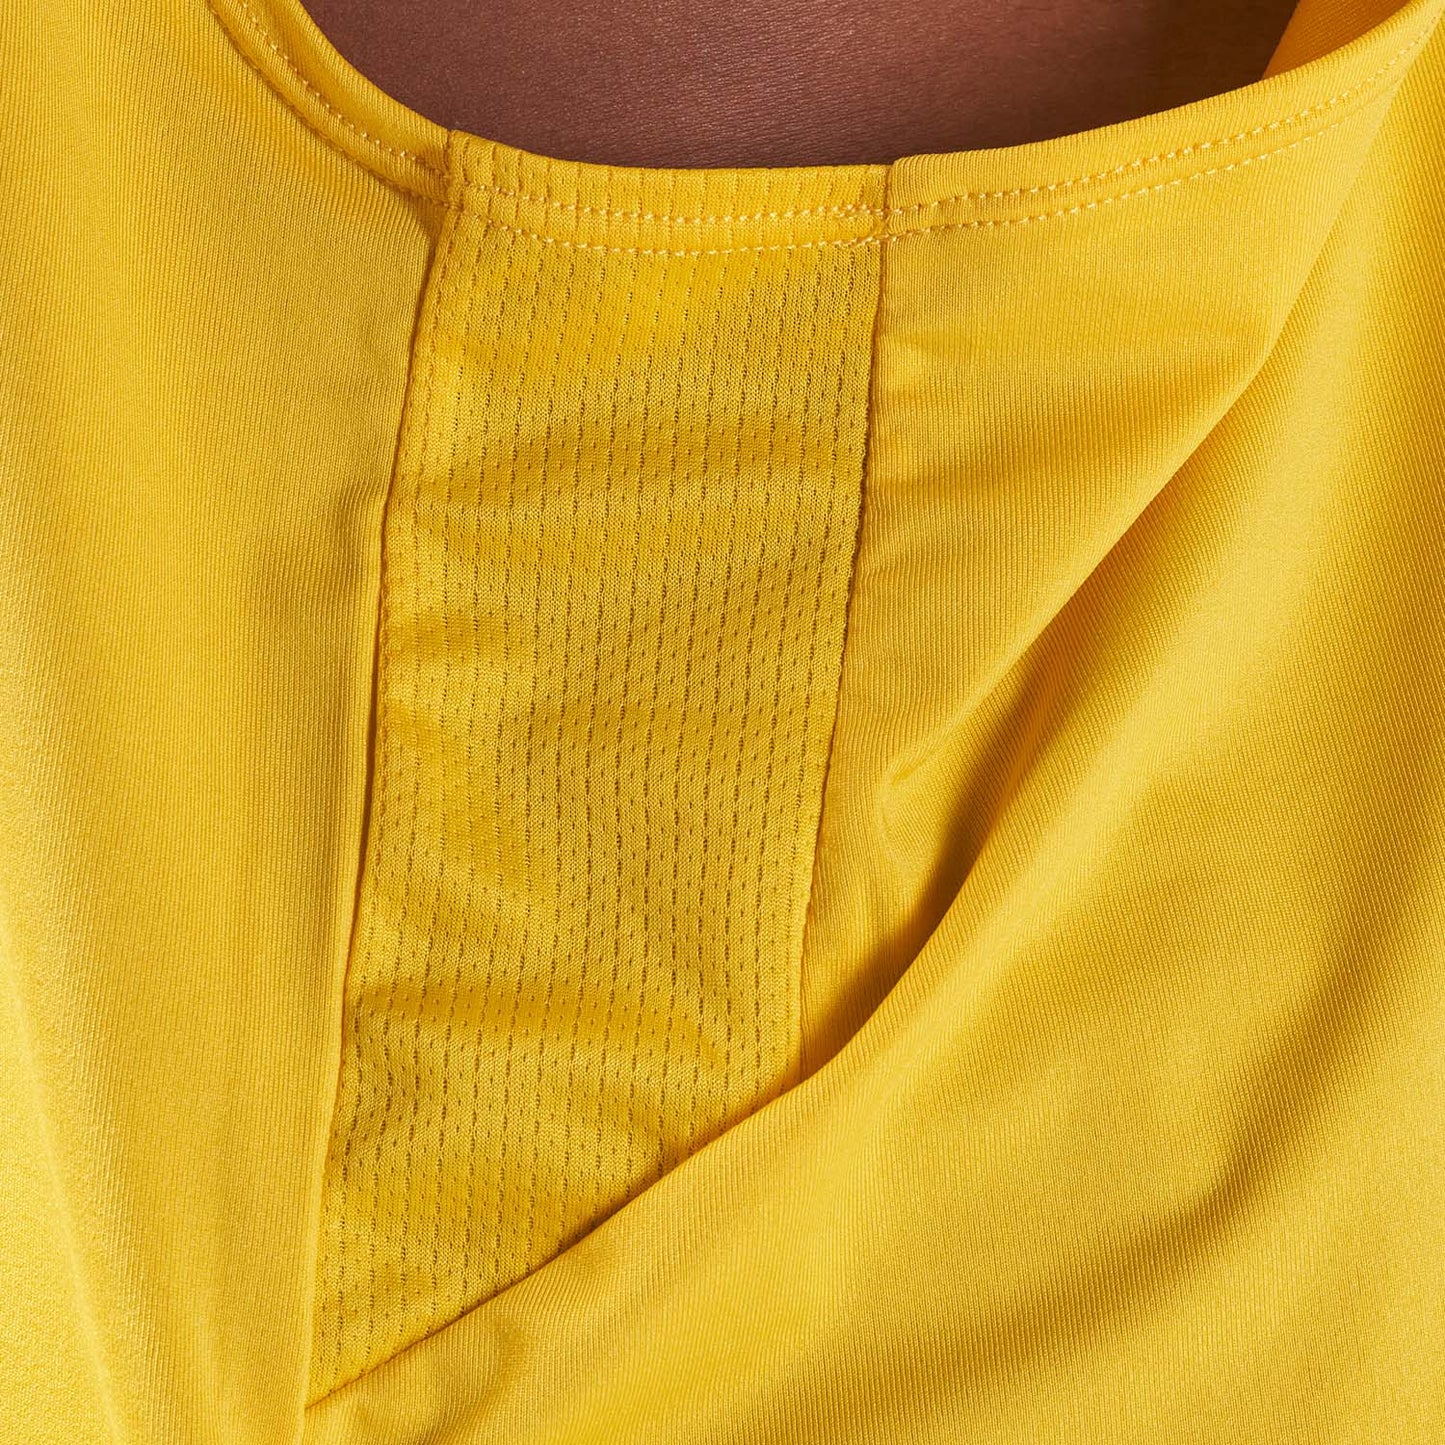 squatwolf-gym-wear-essential-gym-stringer-yellow-stringer-vests-for-men